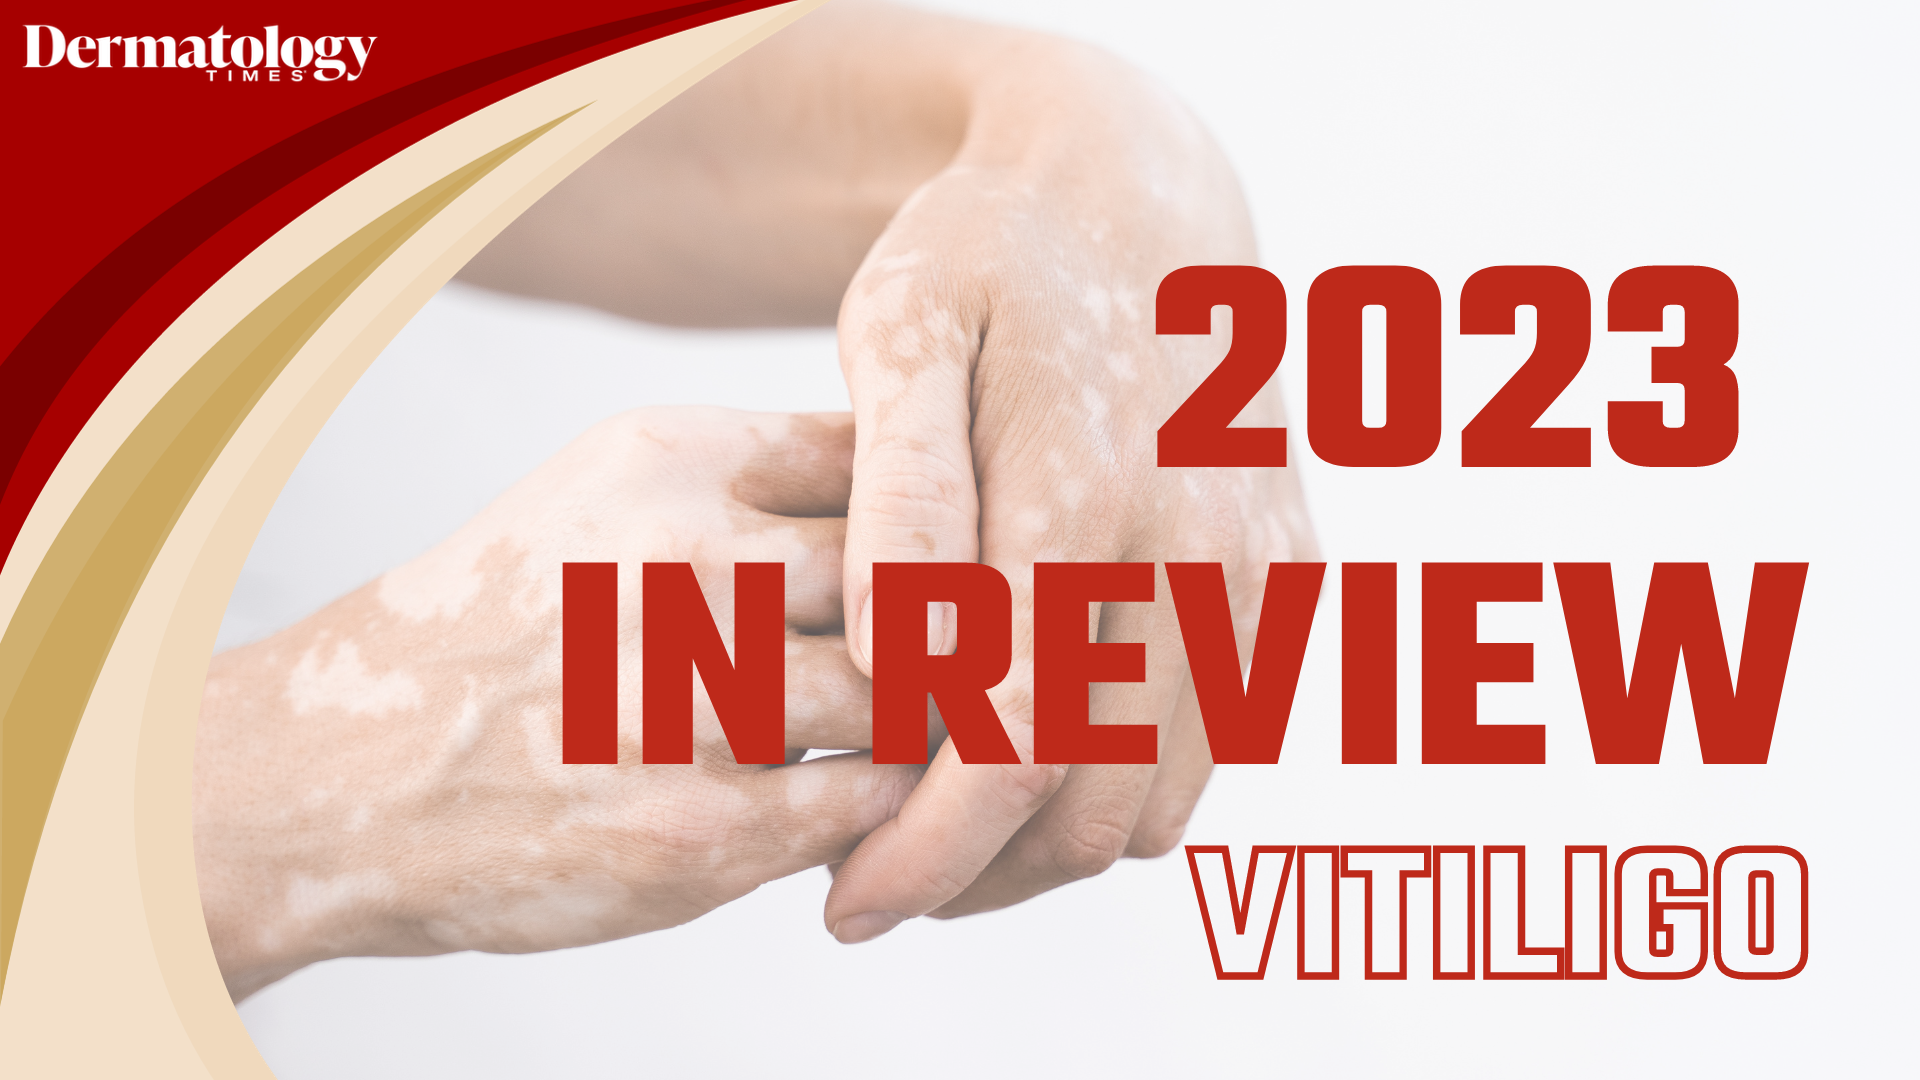 Dermatology Times 2023 In Review: Vitiligo 